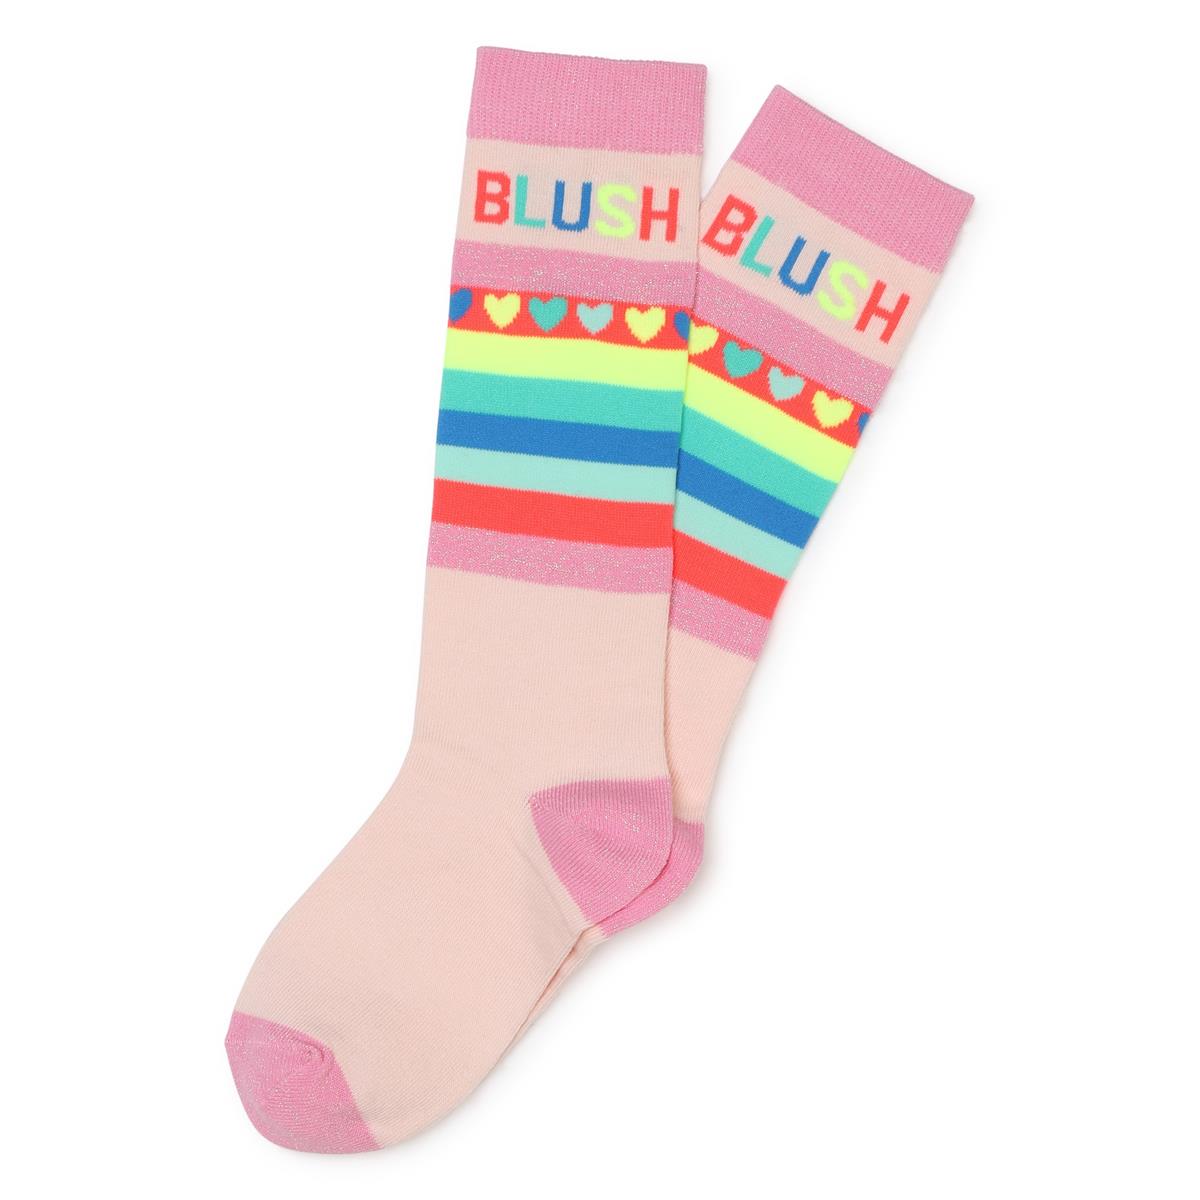 Girls Pink Socks